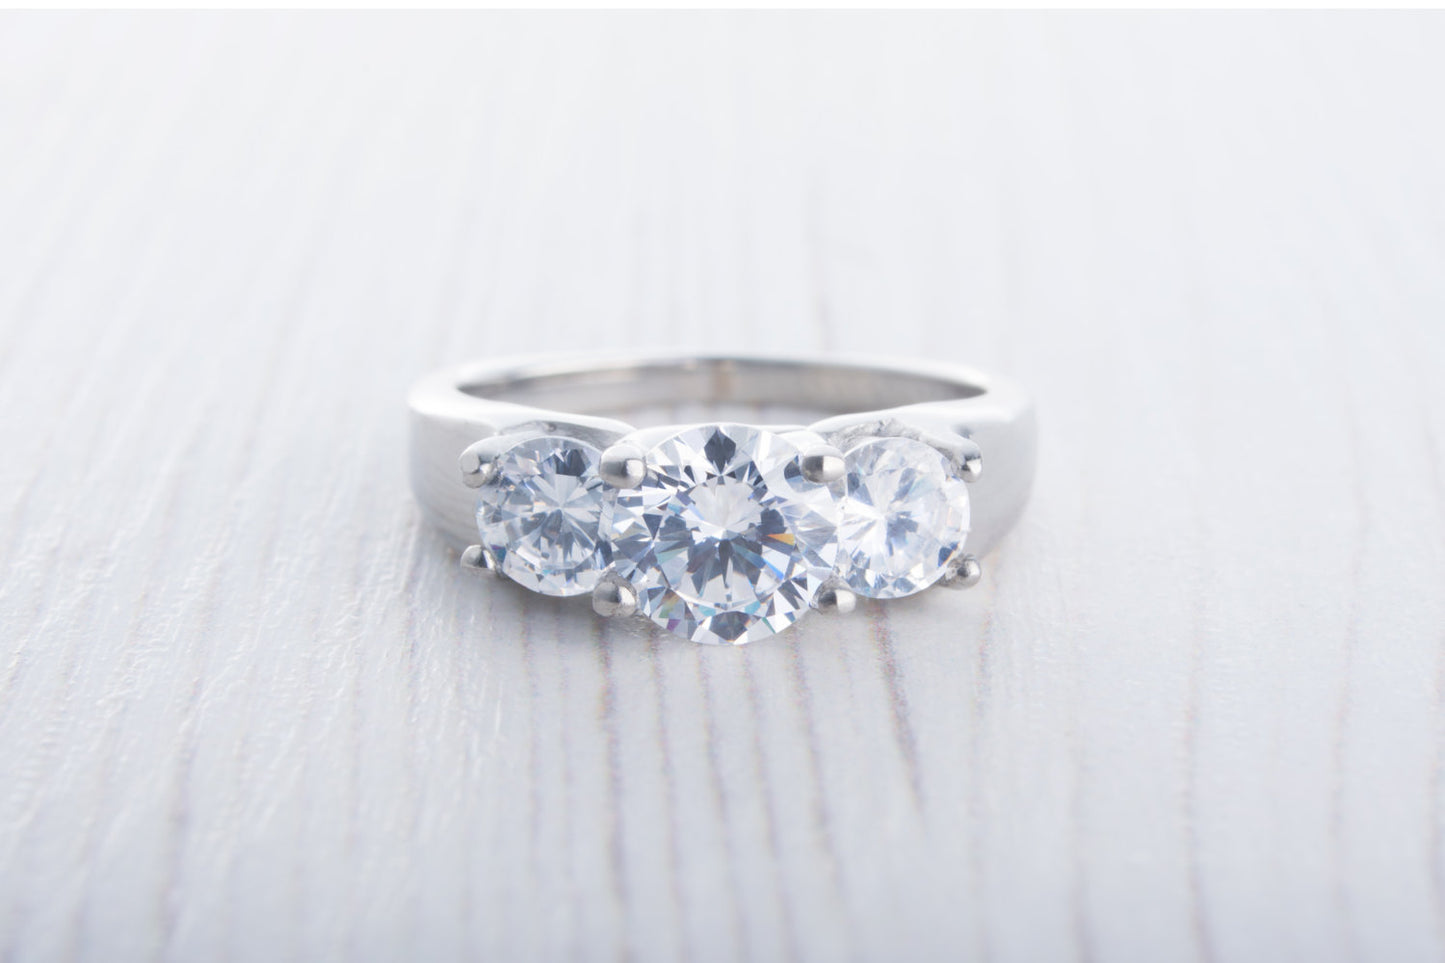 White Sapphire 3 stone trellis trilogy ring in titanium or white gold - engagement ring